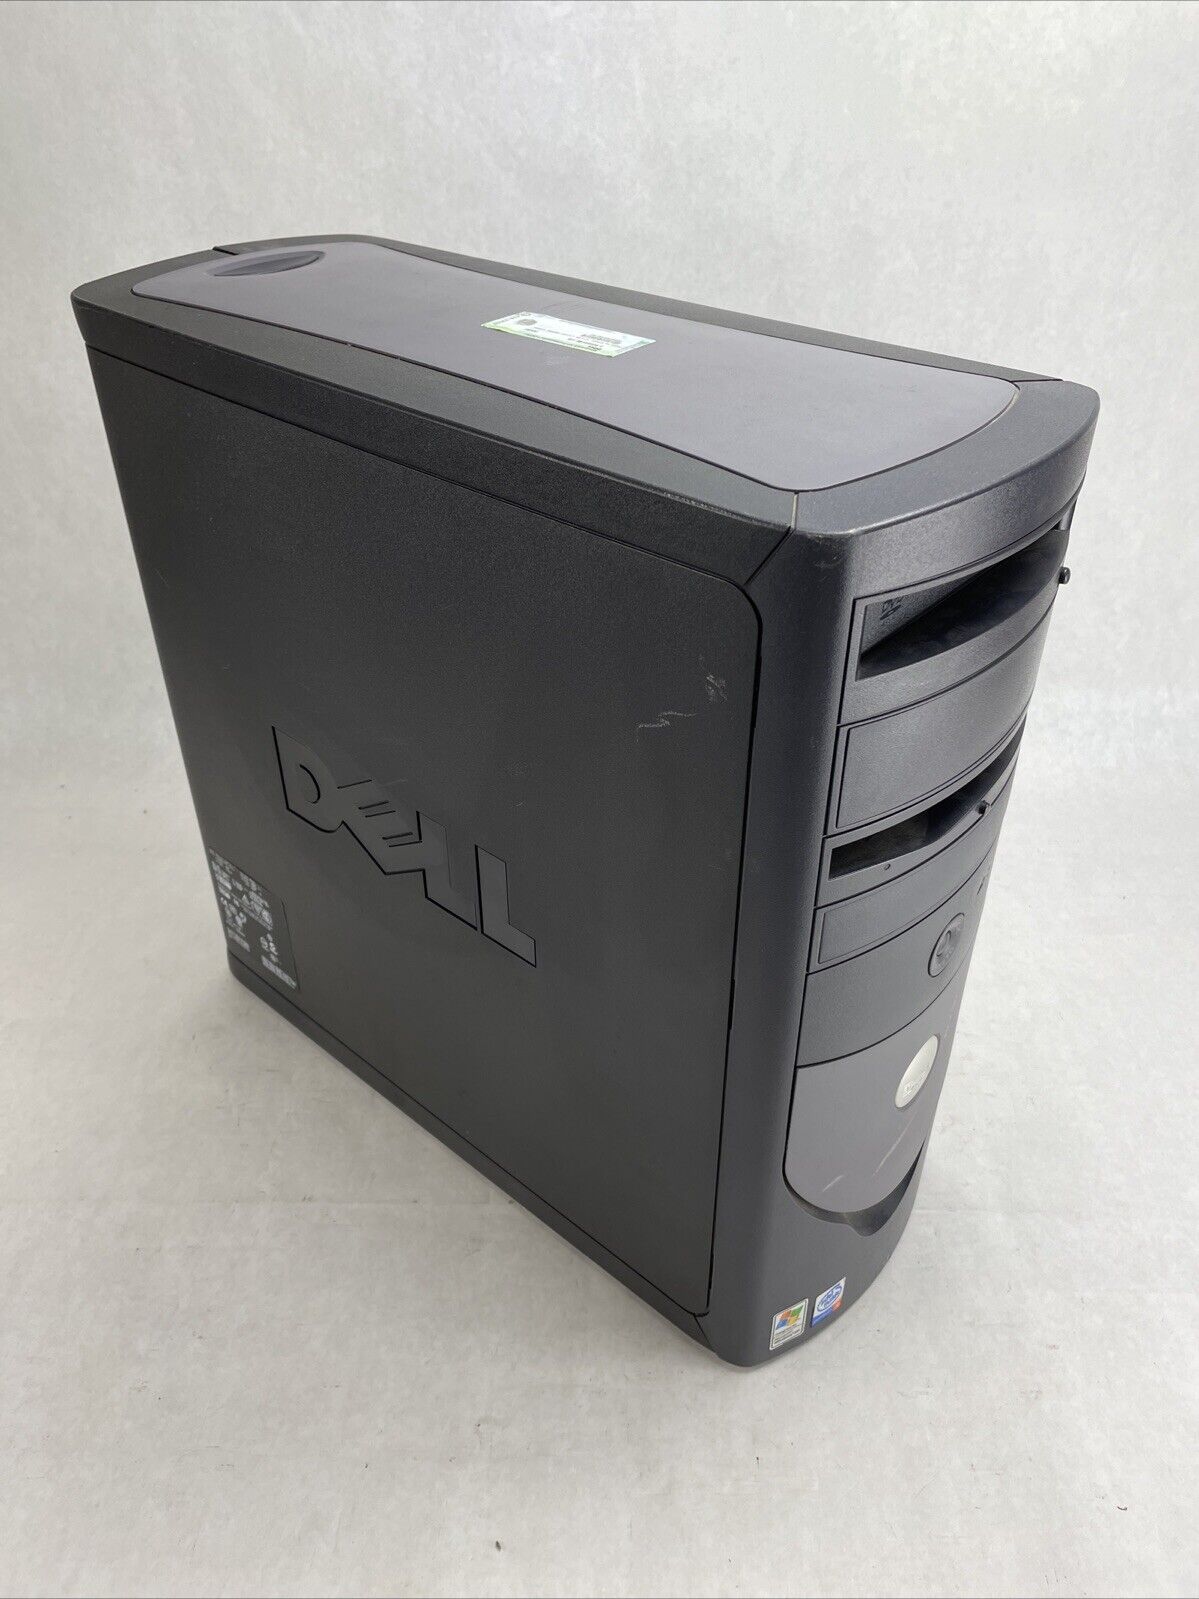 Dell Optiplex GX270 MT Intel Pentium 4 3GHz 1GB RAM No HDD No OS